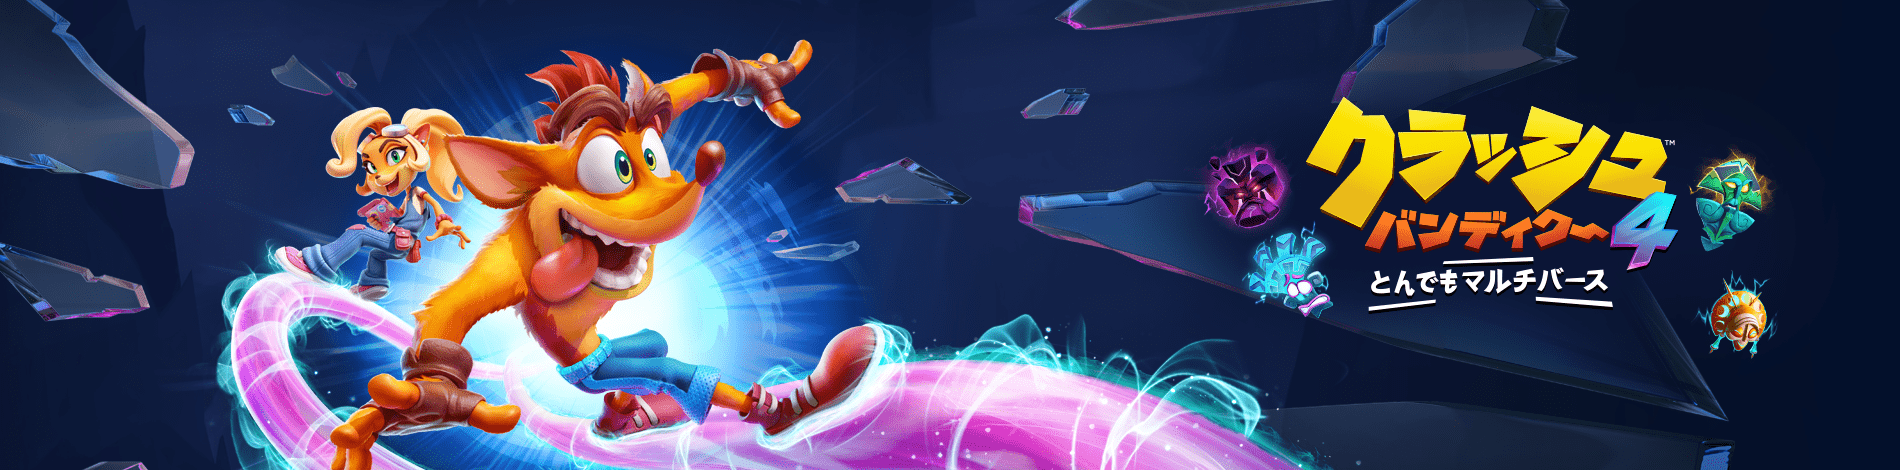 Fairy Tail 魔法図鑑 名の魔導士たちがド迫力の魔法バトルを展開 特集第2回 Playstation Blog